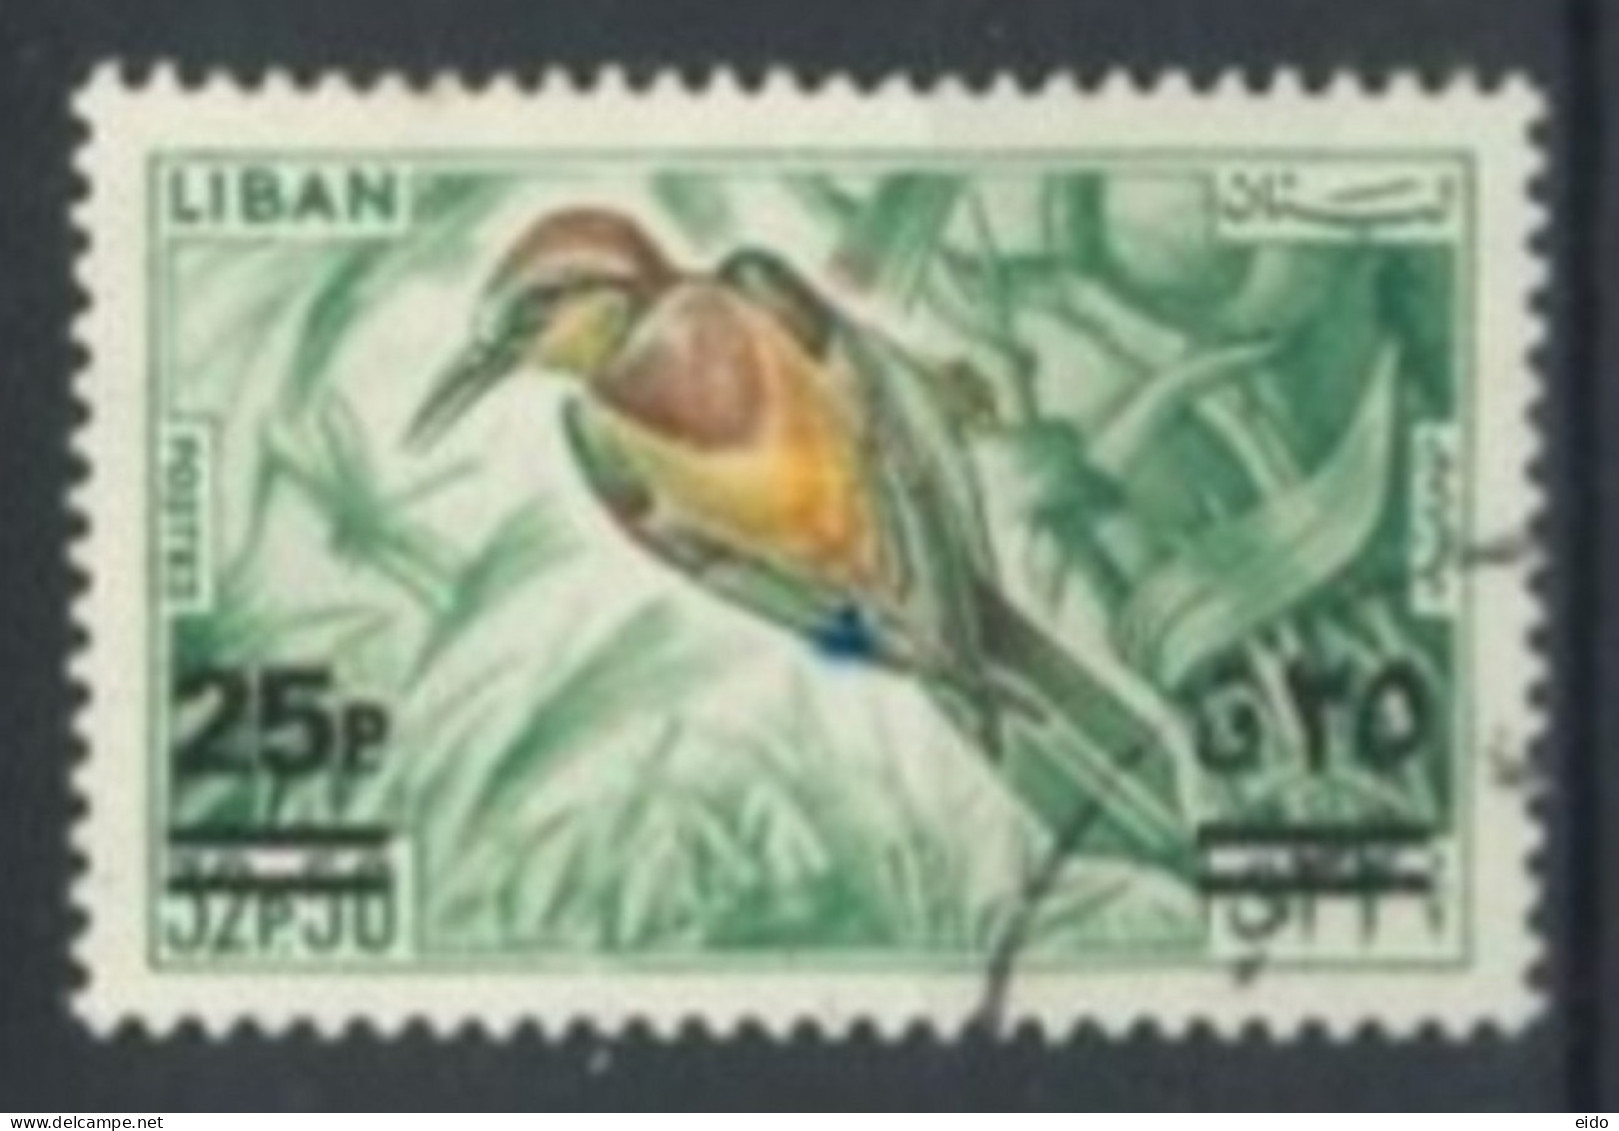 LEBANON -1972, BIRD STAMP OF 1965 SURCH,  SG # 1119, USED. - Liban